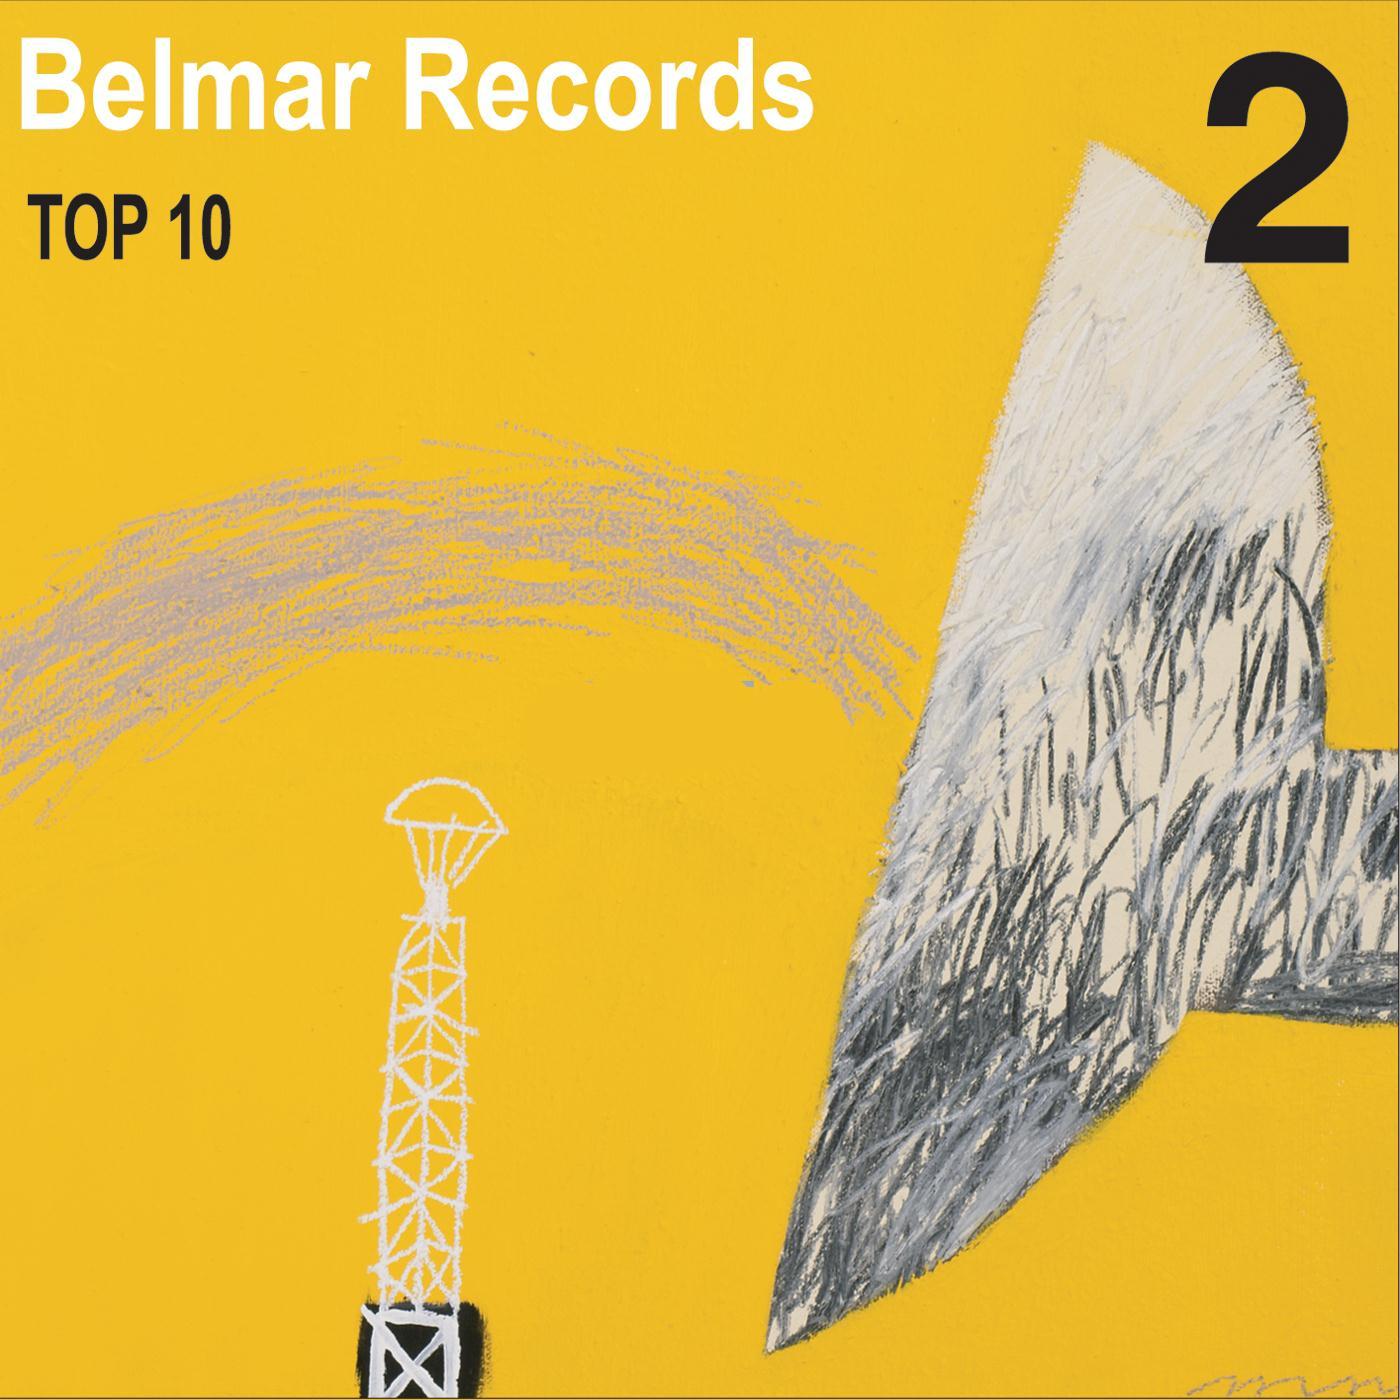 Belmar Records Top 10, Vol. 2